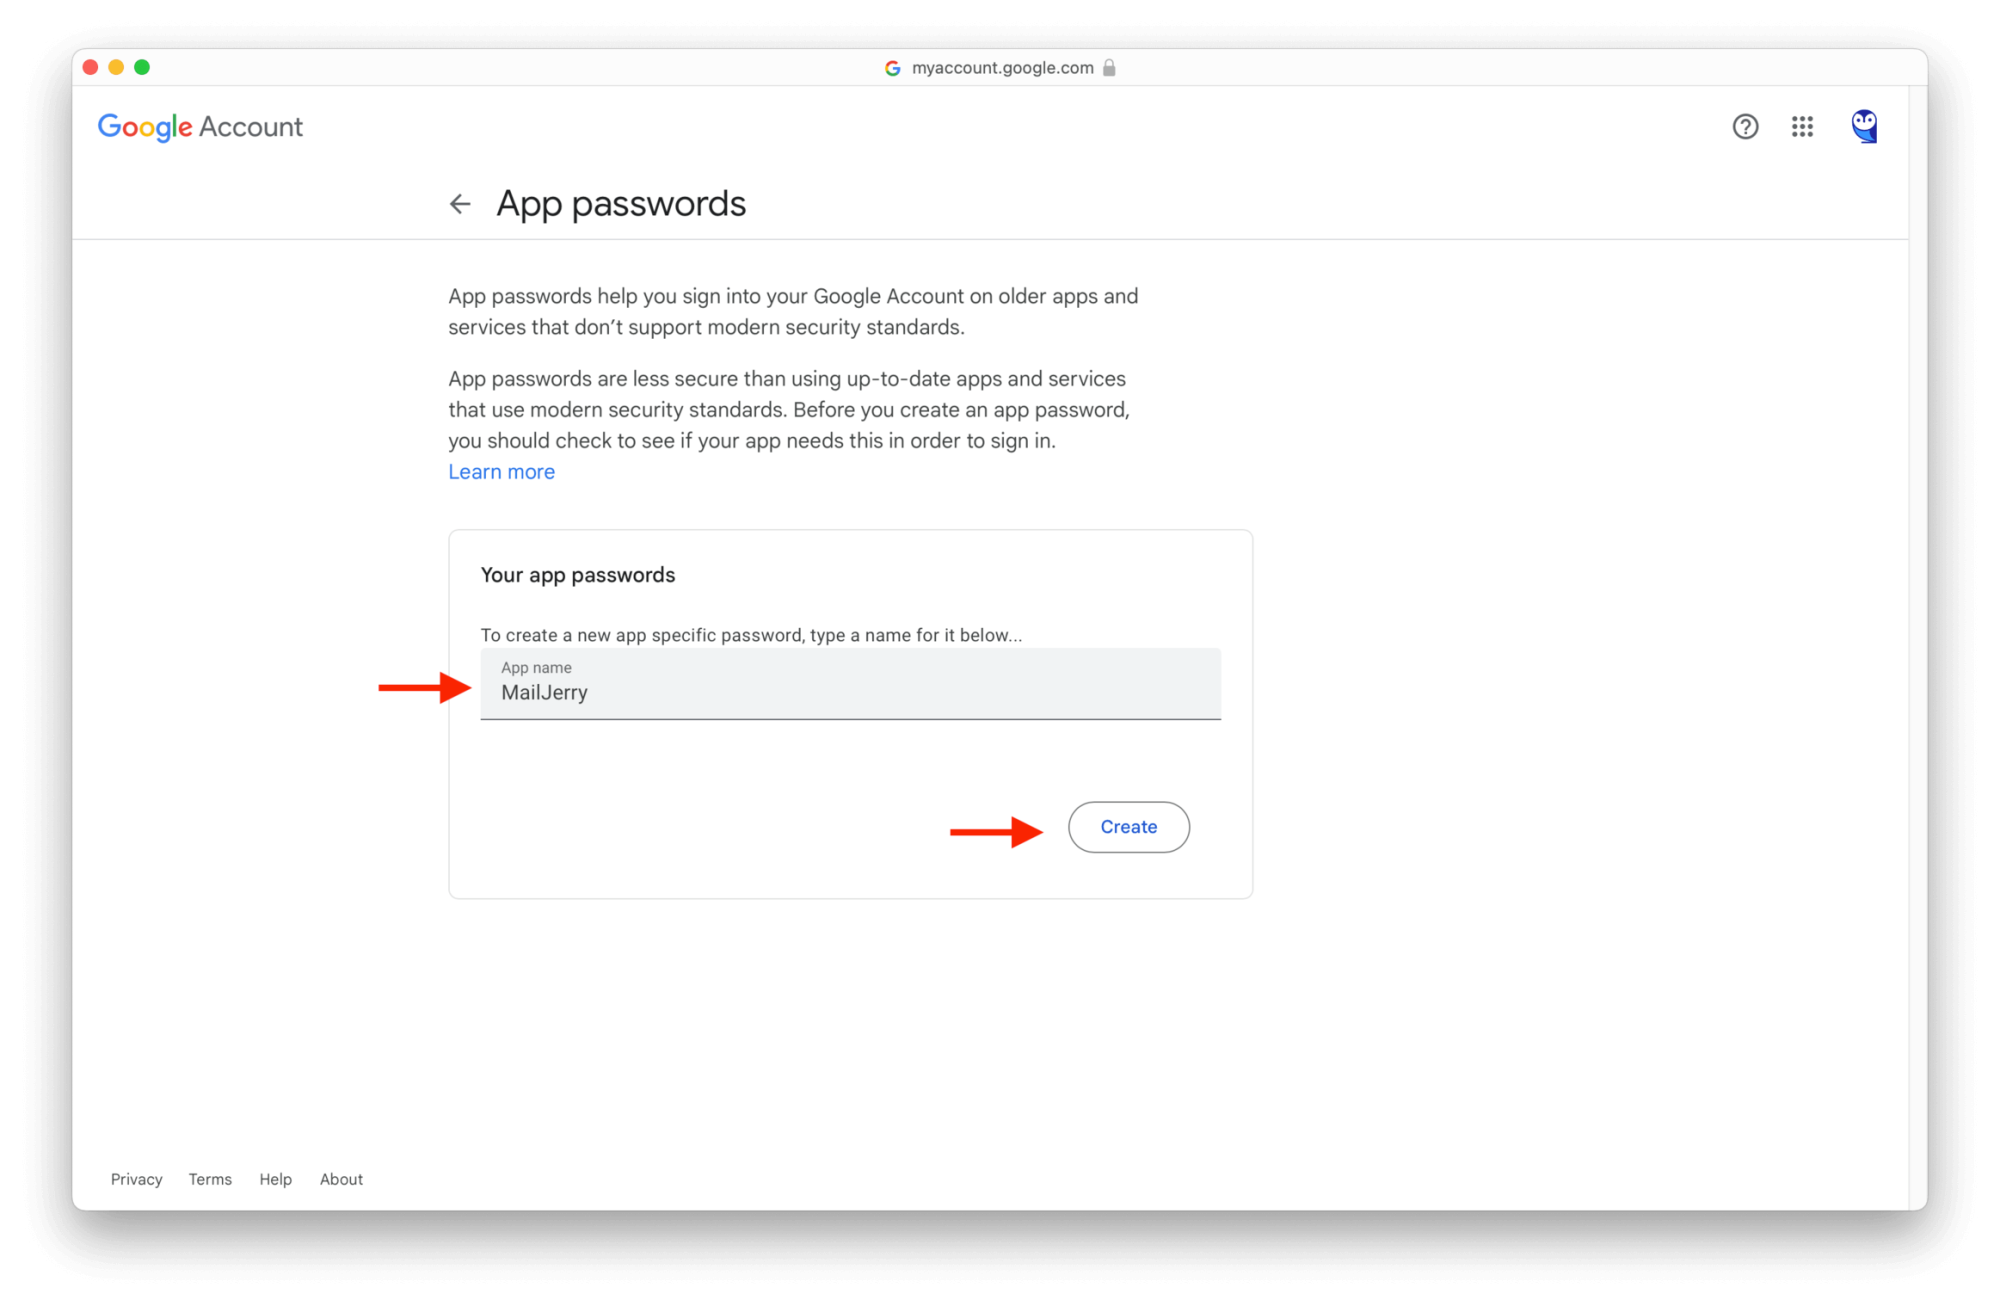 Gmail Migration: Create App Password – New Password